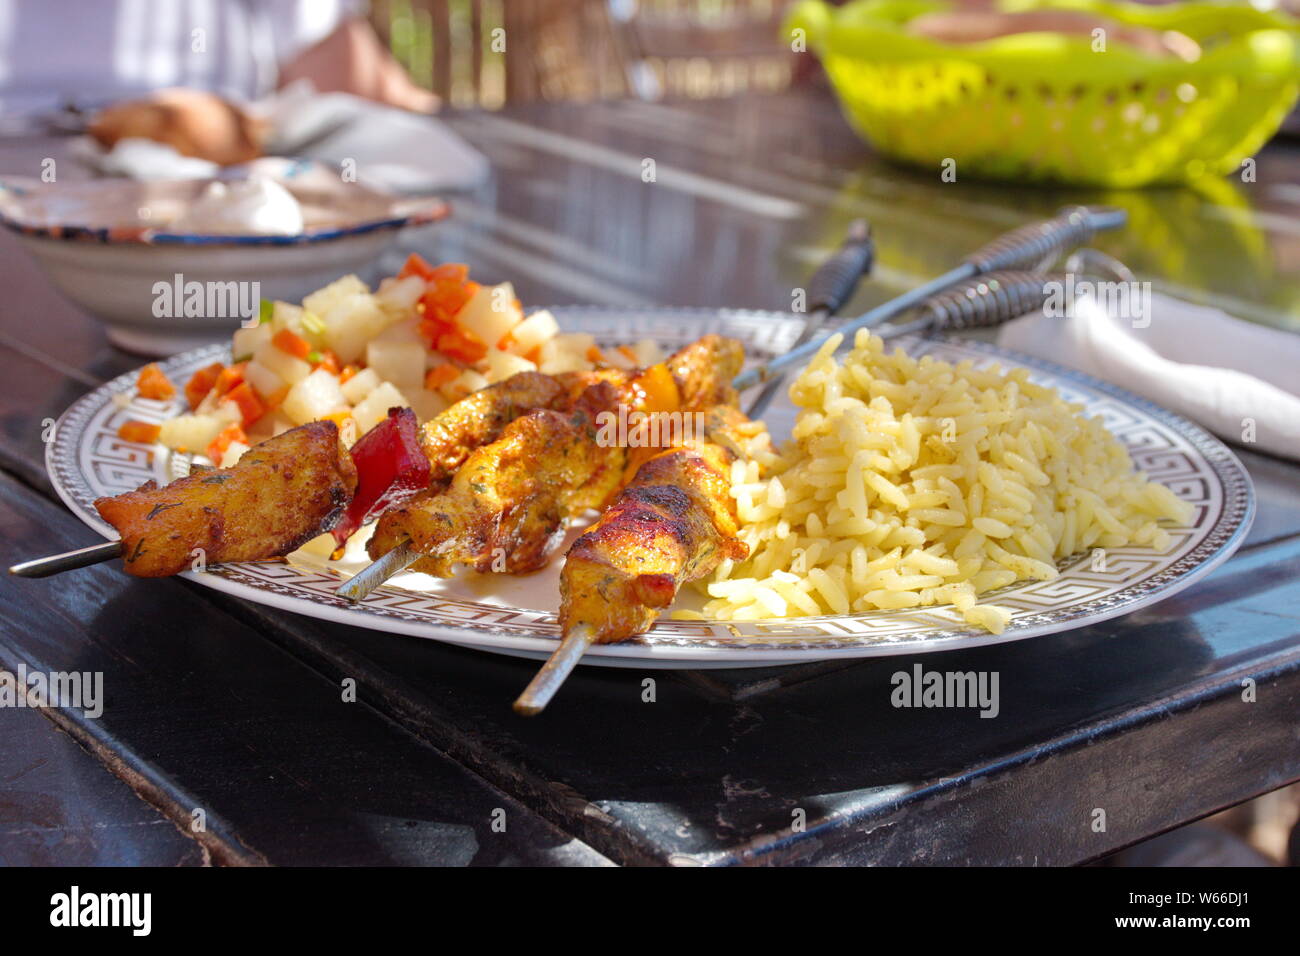 Kebab with kus kus - traditional Moroccan food Stock Photo